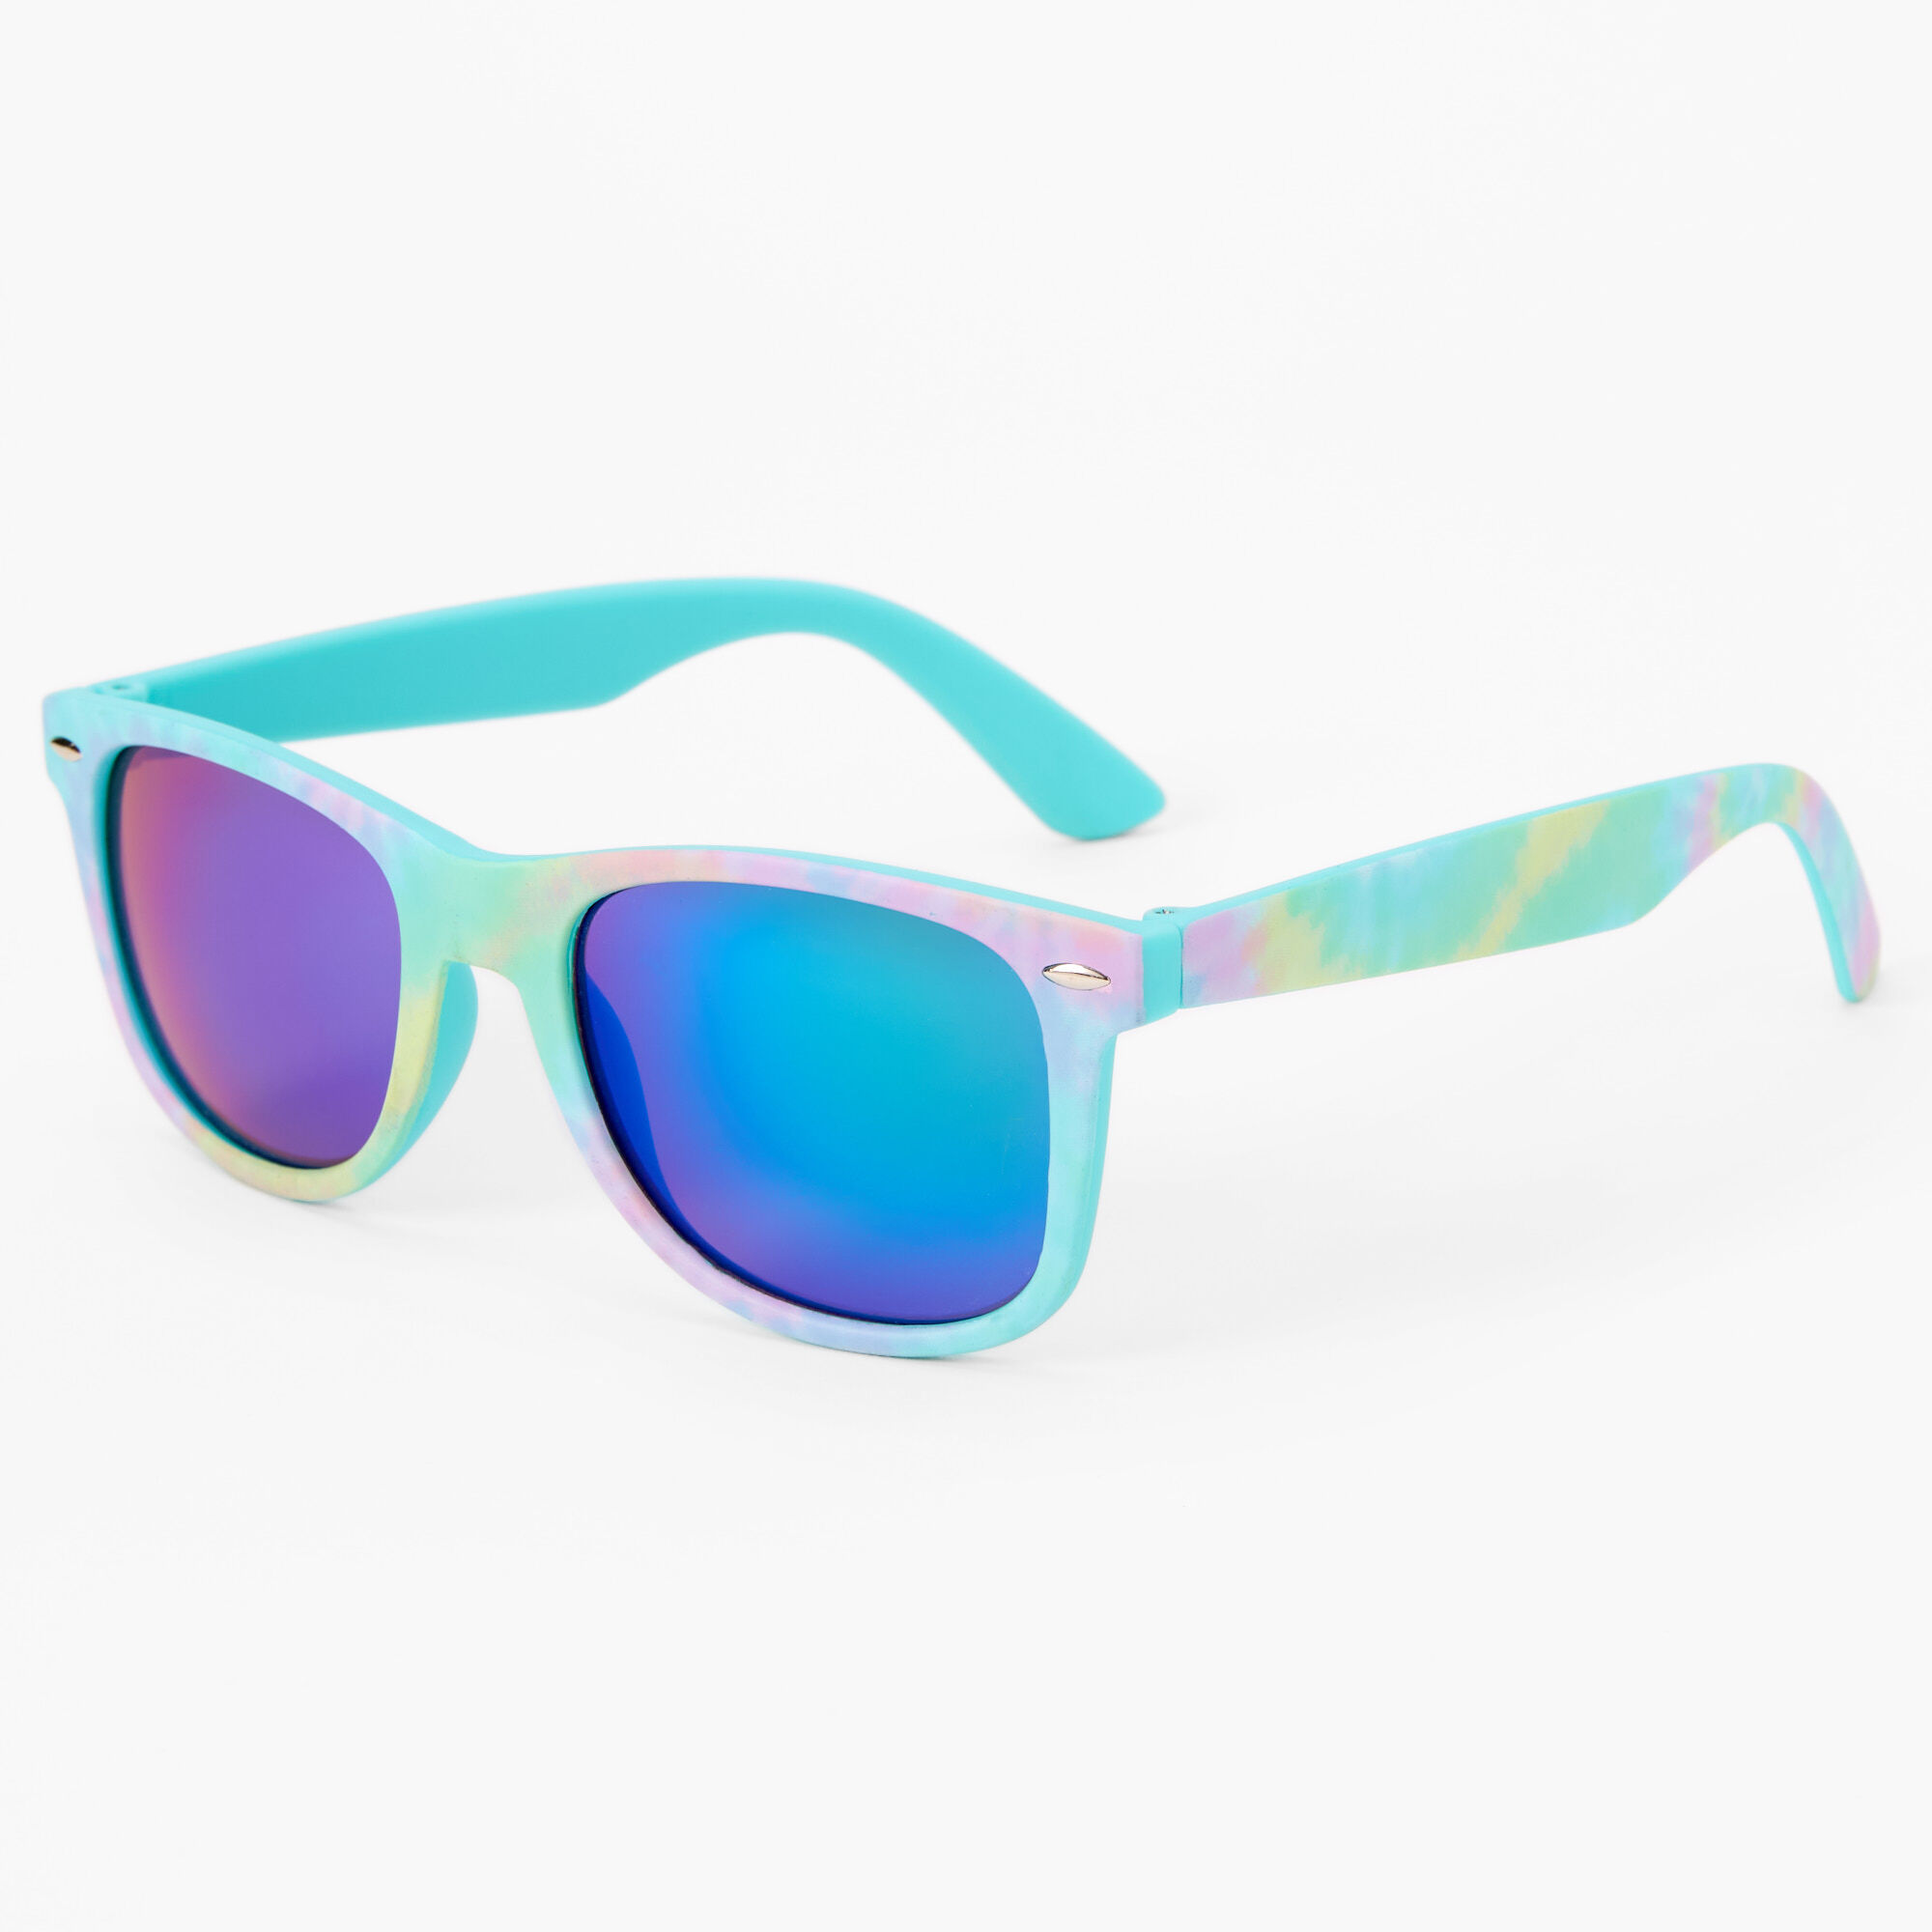 View Claires Aqua Tie Dye Mirrored Sunglasses information